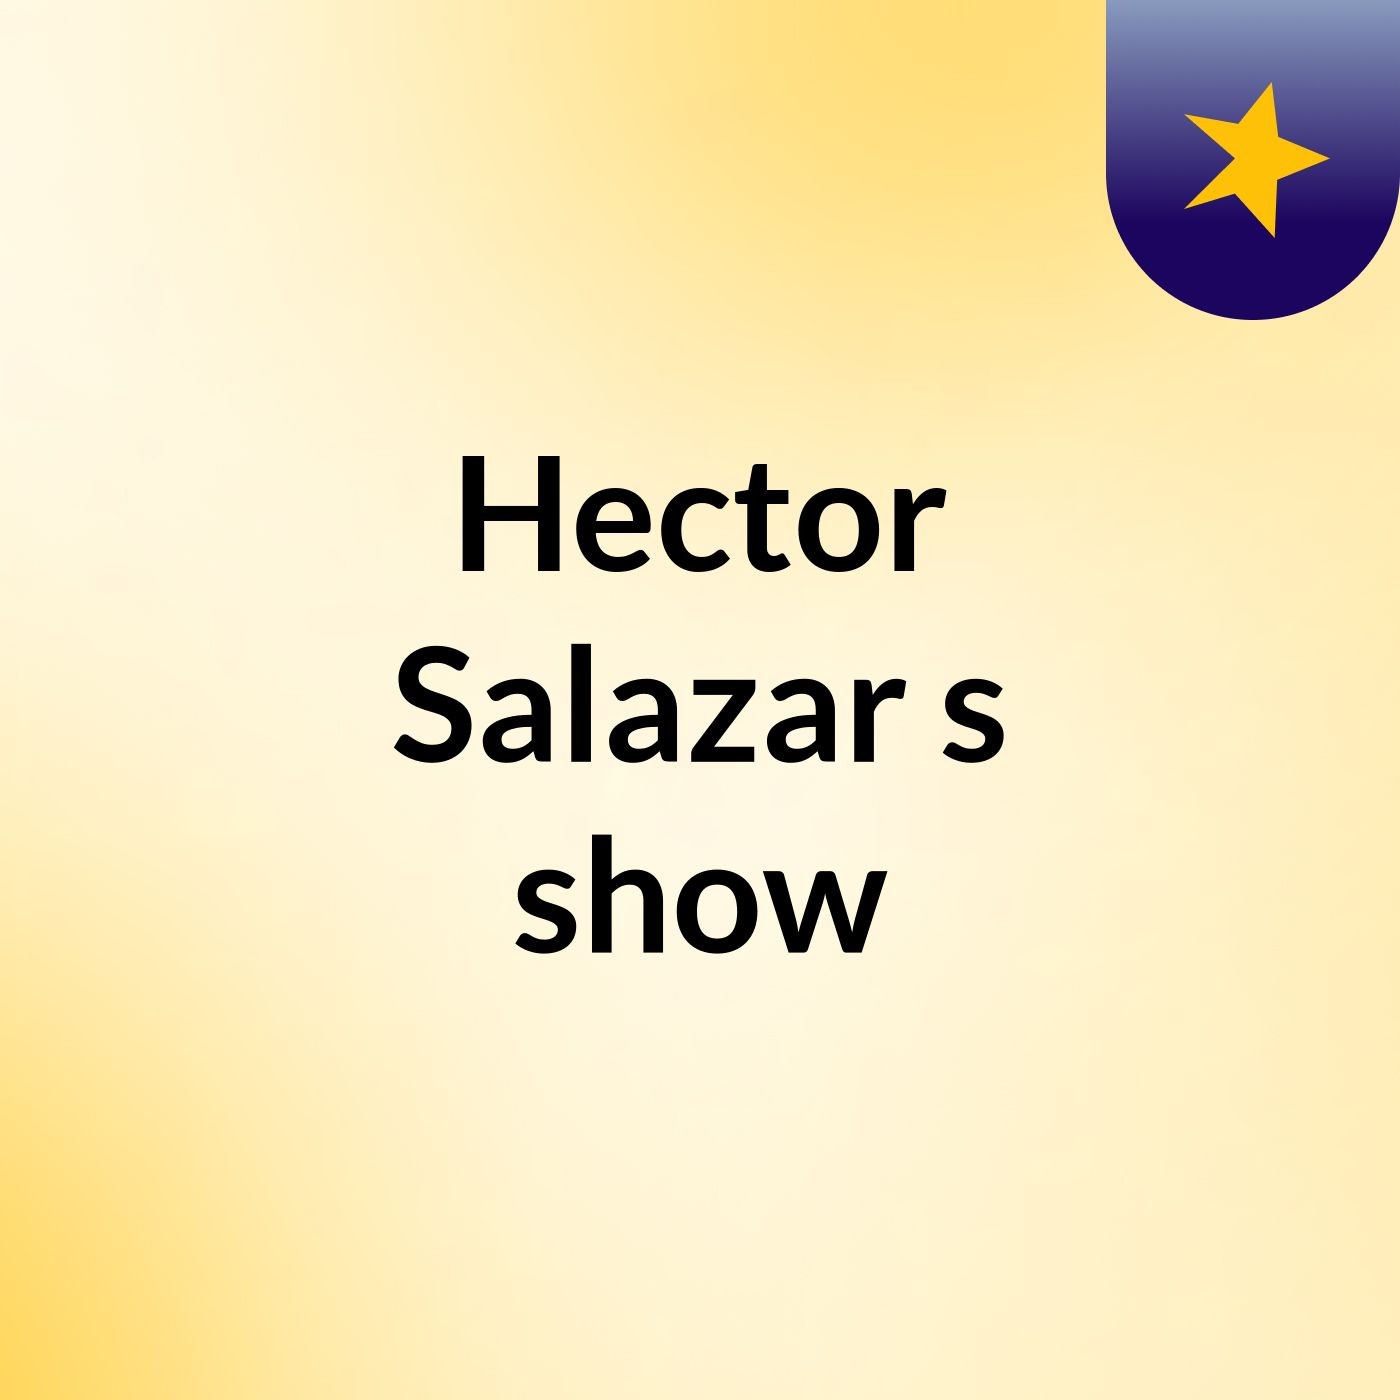 Hector Salazar's show